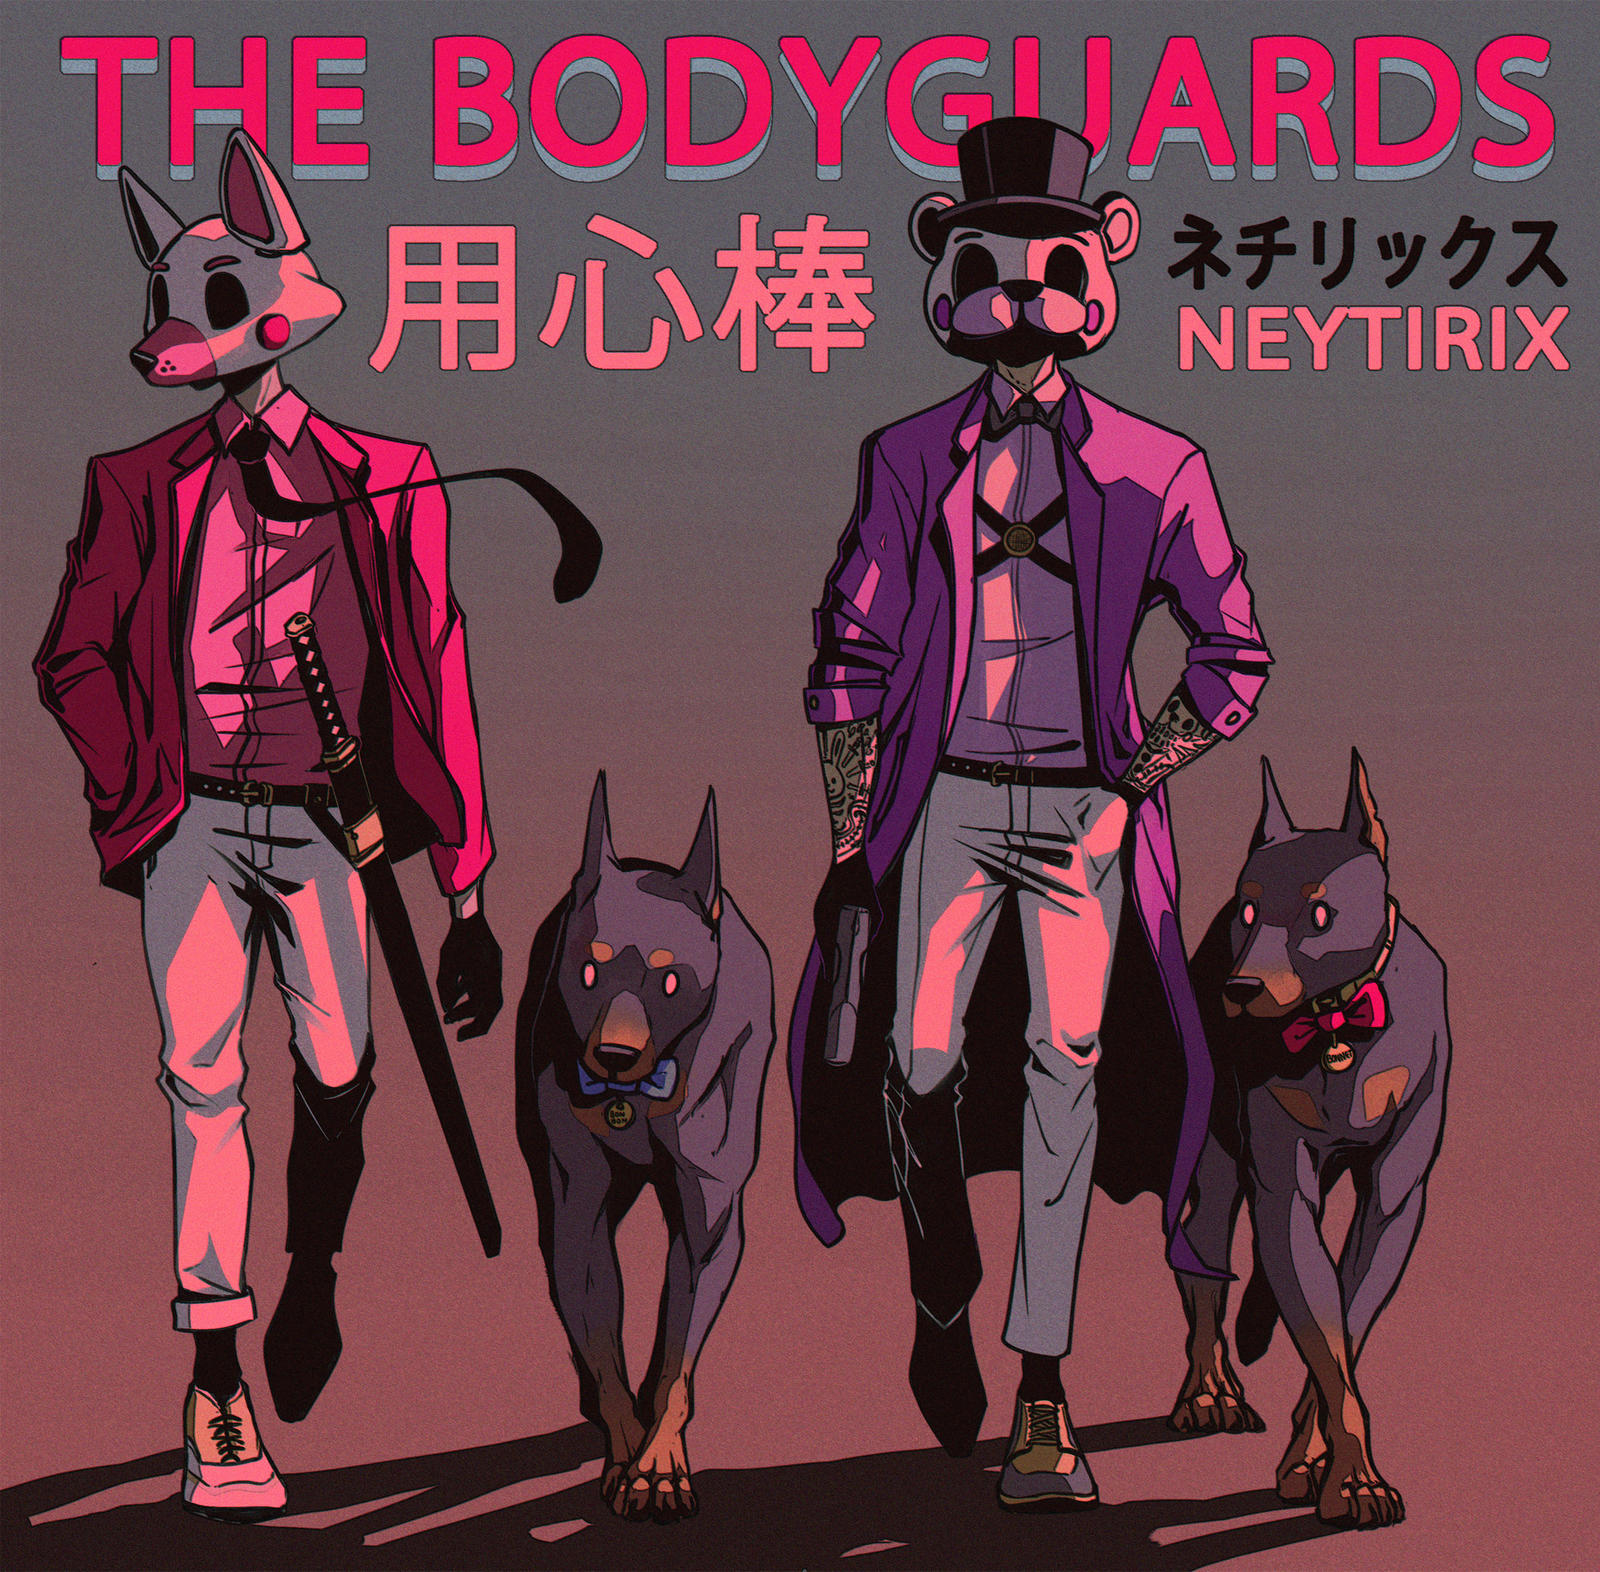 THE BODYGUARDS (FNAF) by Neytirix on DeviantArt